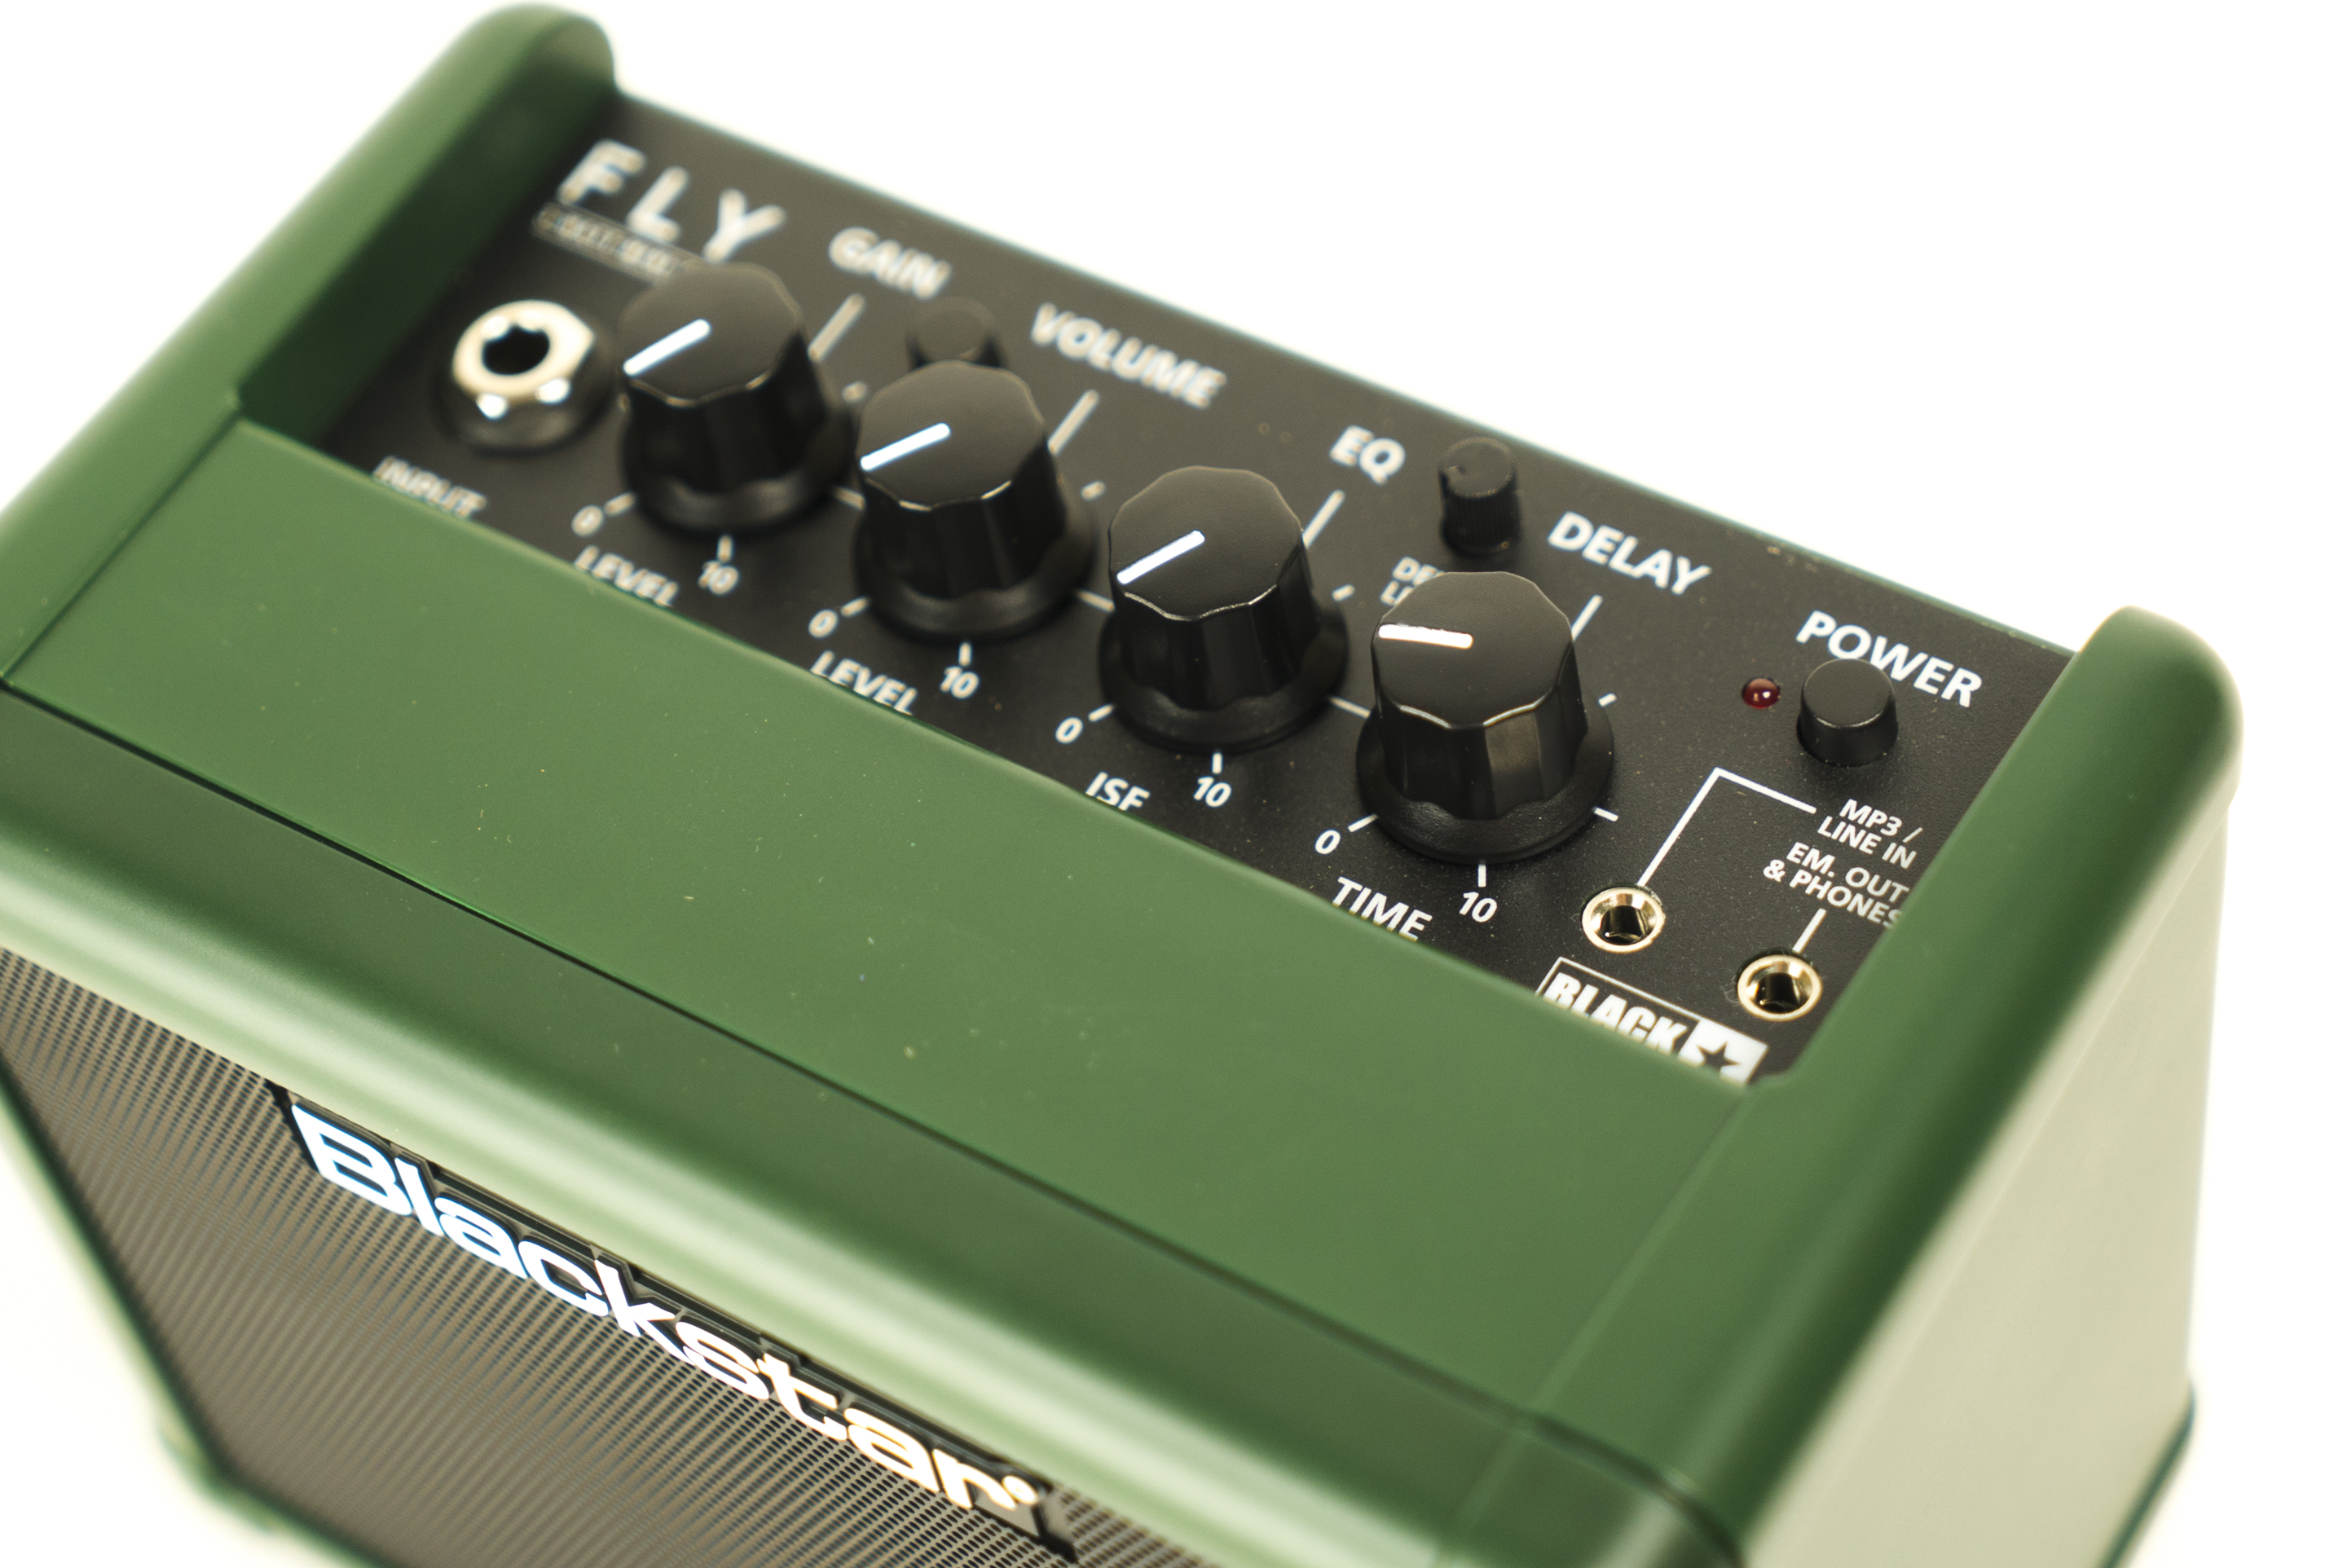 BLACKSTAR FLY 3 Limited Edition Mini Amp - Green $89.99 - PicClick